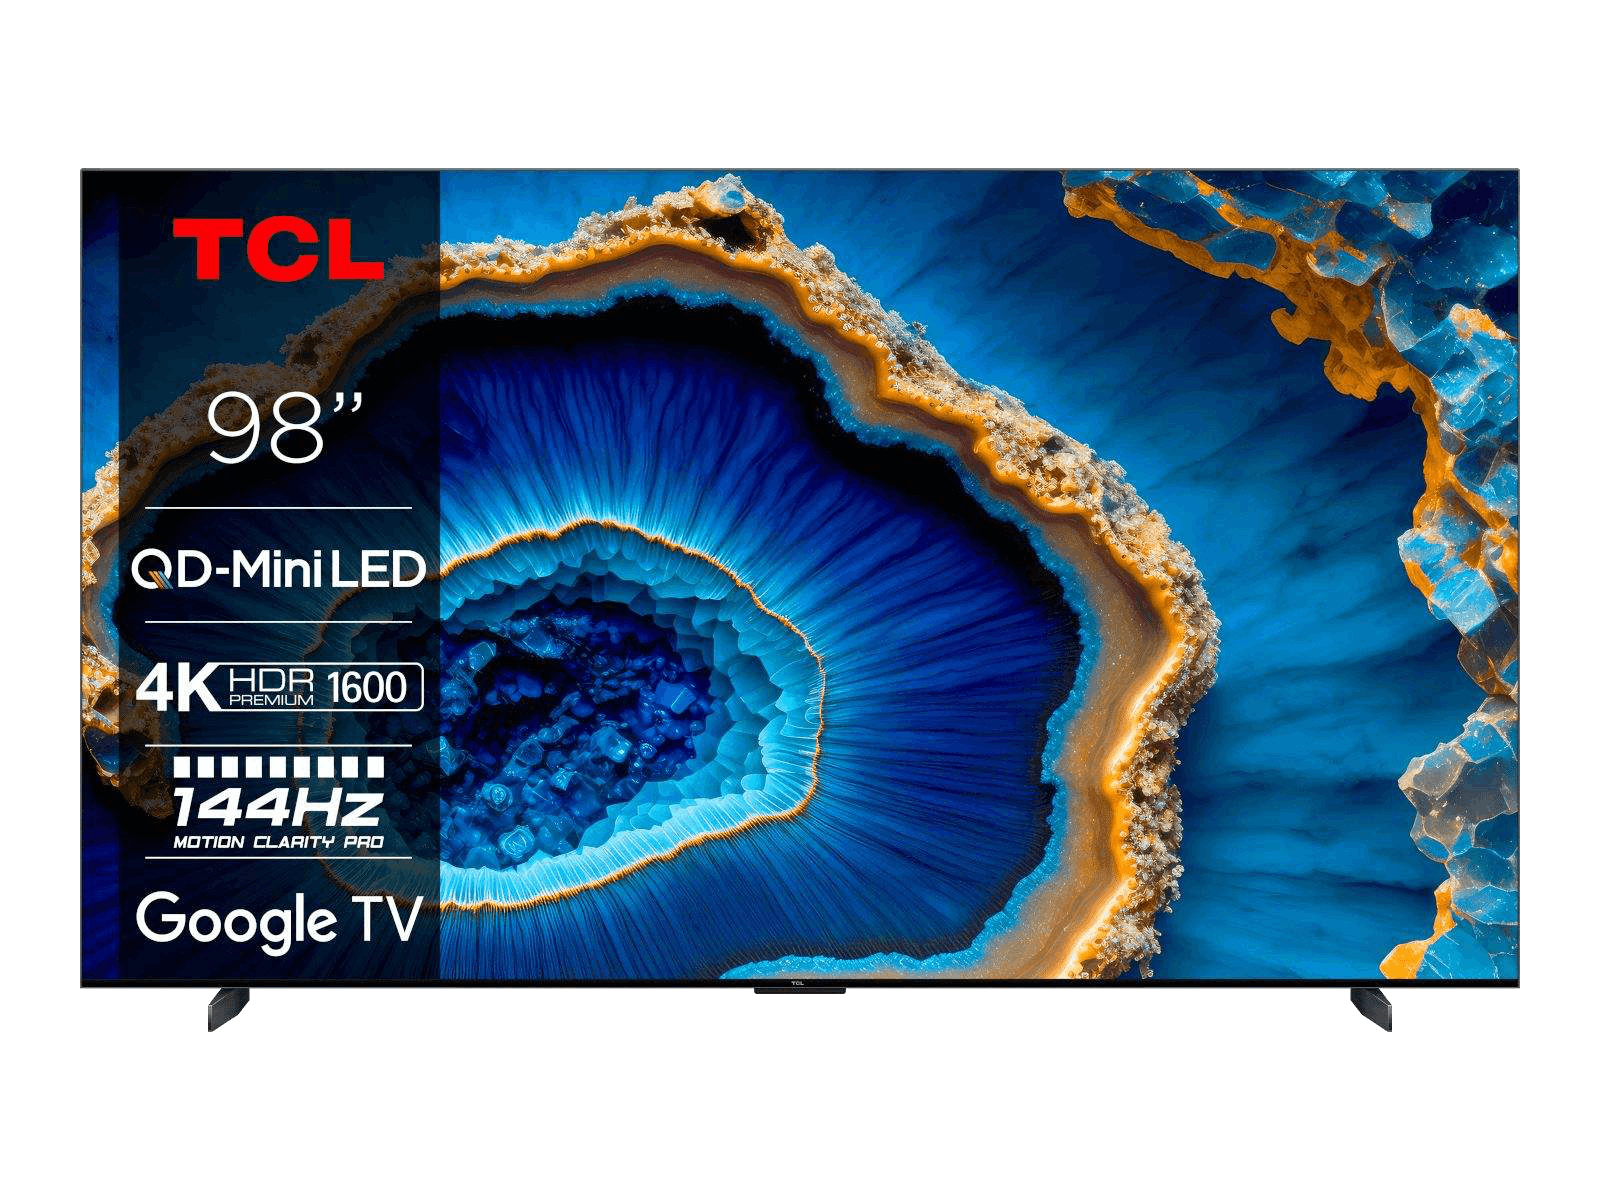 GoogleTV SMART TV, (ATV TCL 98 TV cm, 12.0)) 248,9 Zoll 4K, QLED QLED 98C805 (Flat, /